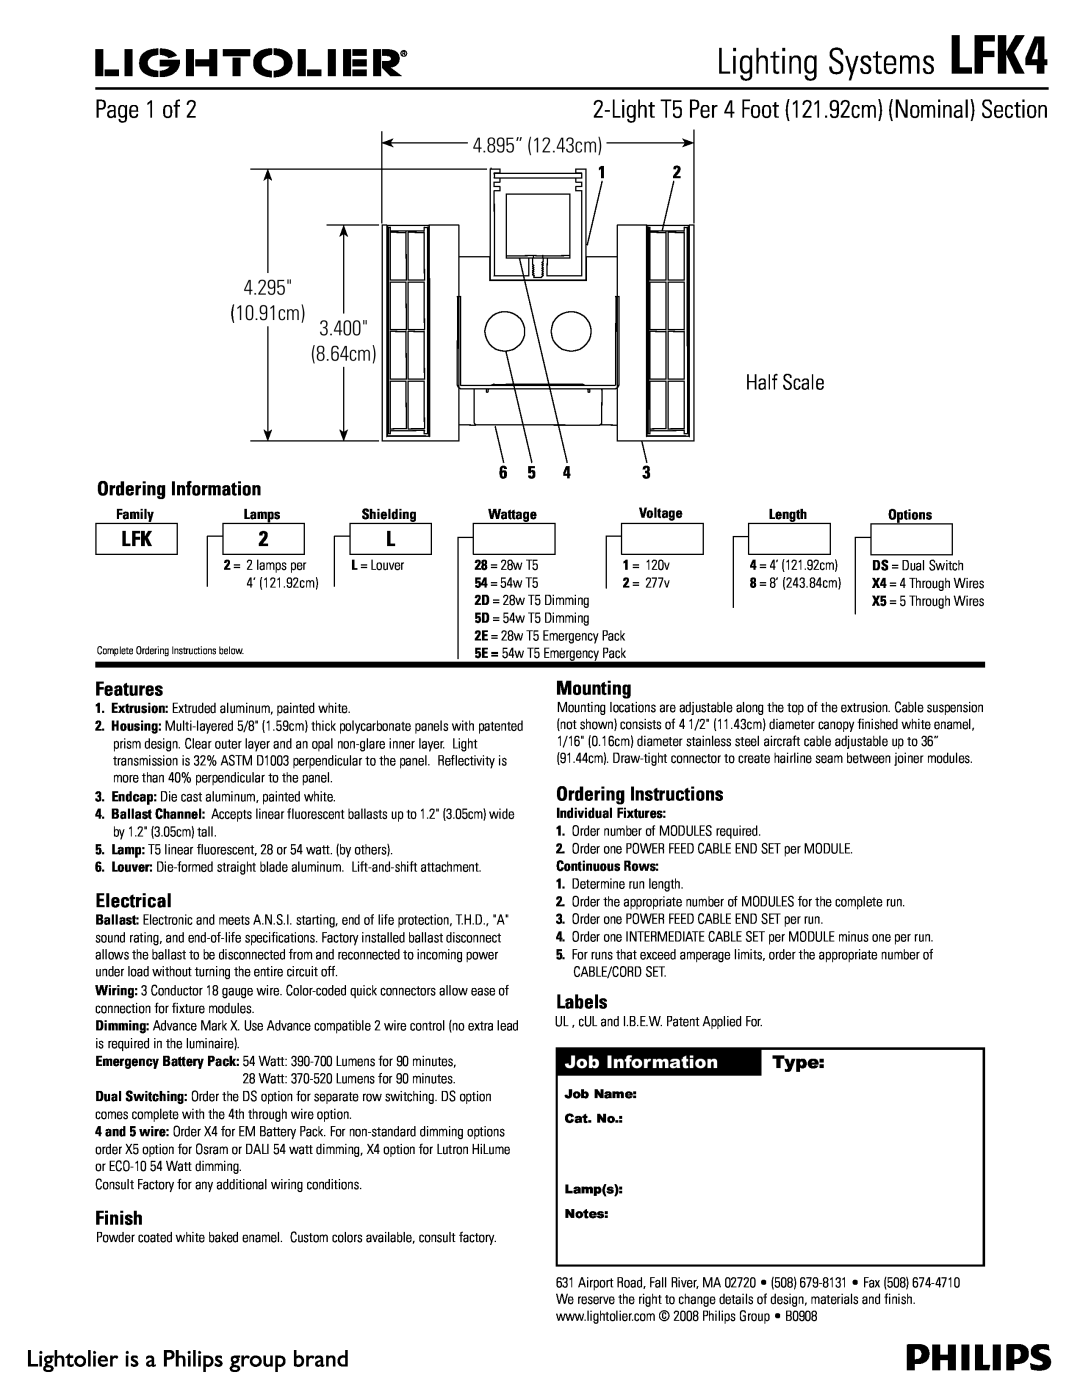 Lightolier specifications Lighting Systems LFK4, 1BHFPG, Job Information, Type, 4.295, 4.895” 12.43cm, 3.400 